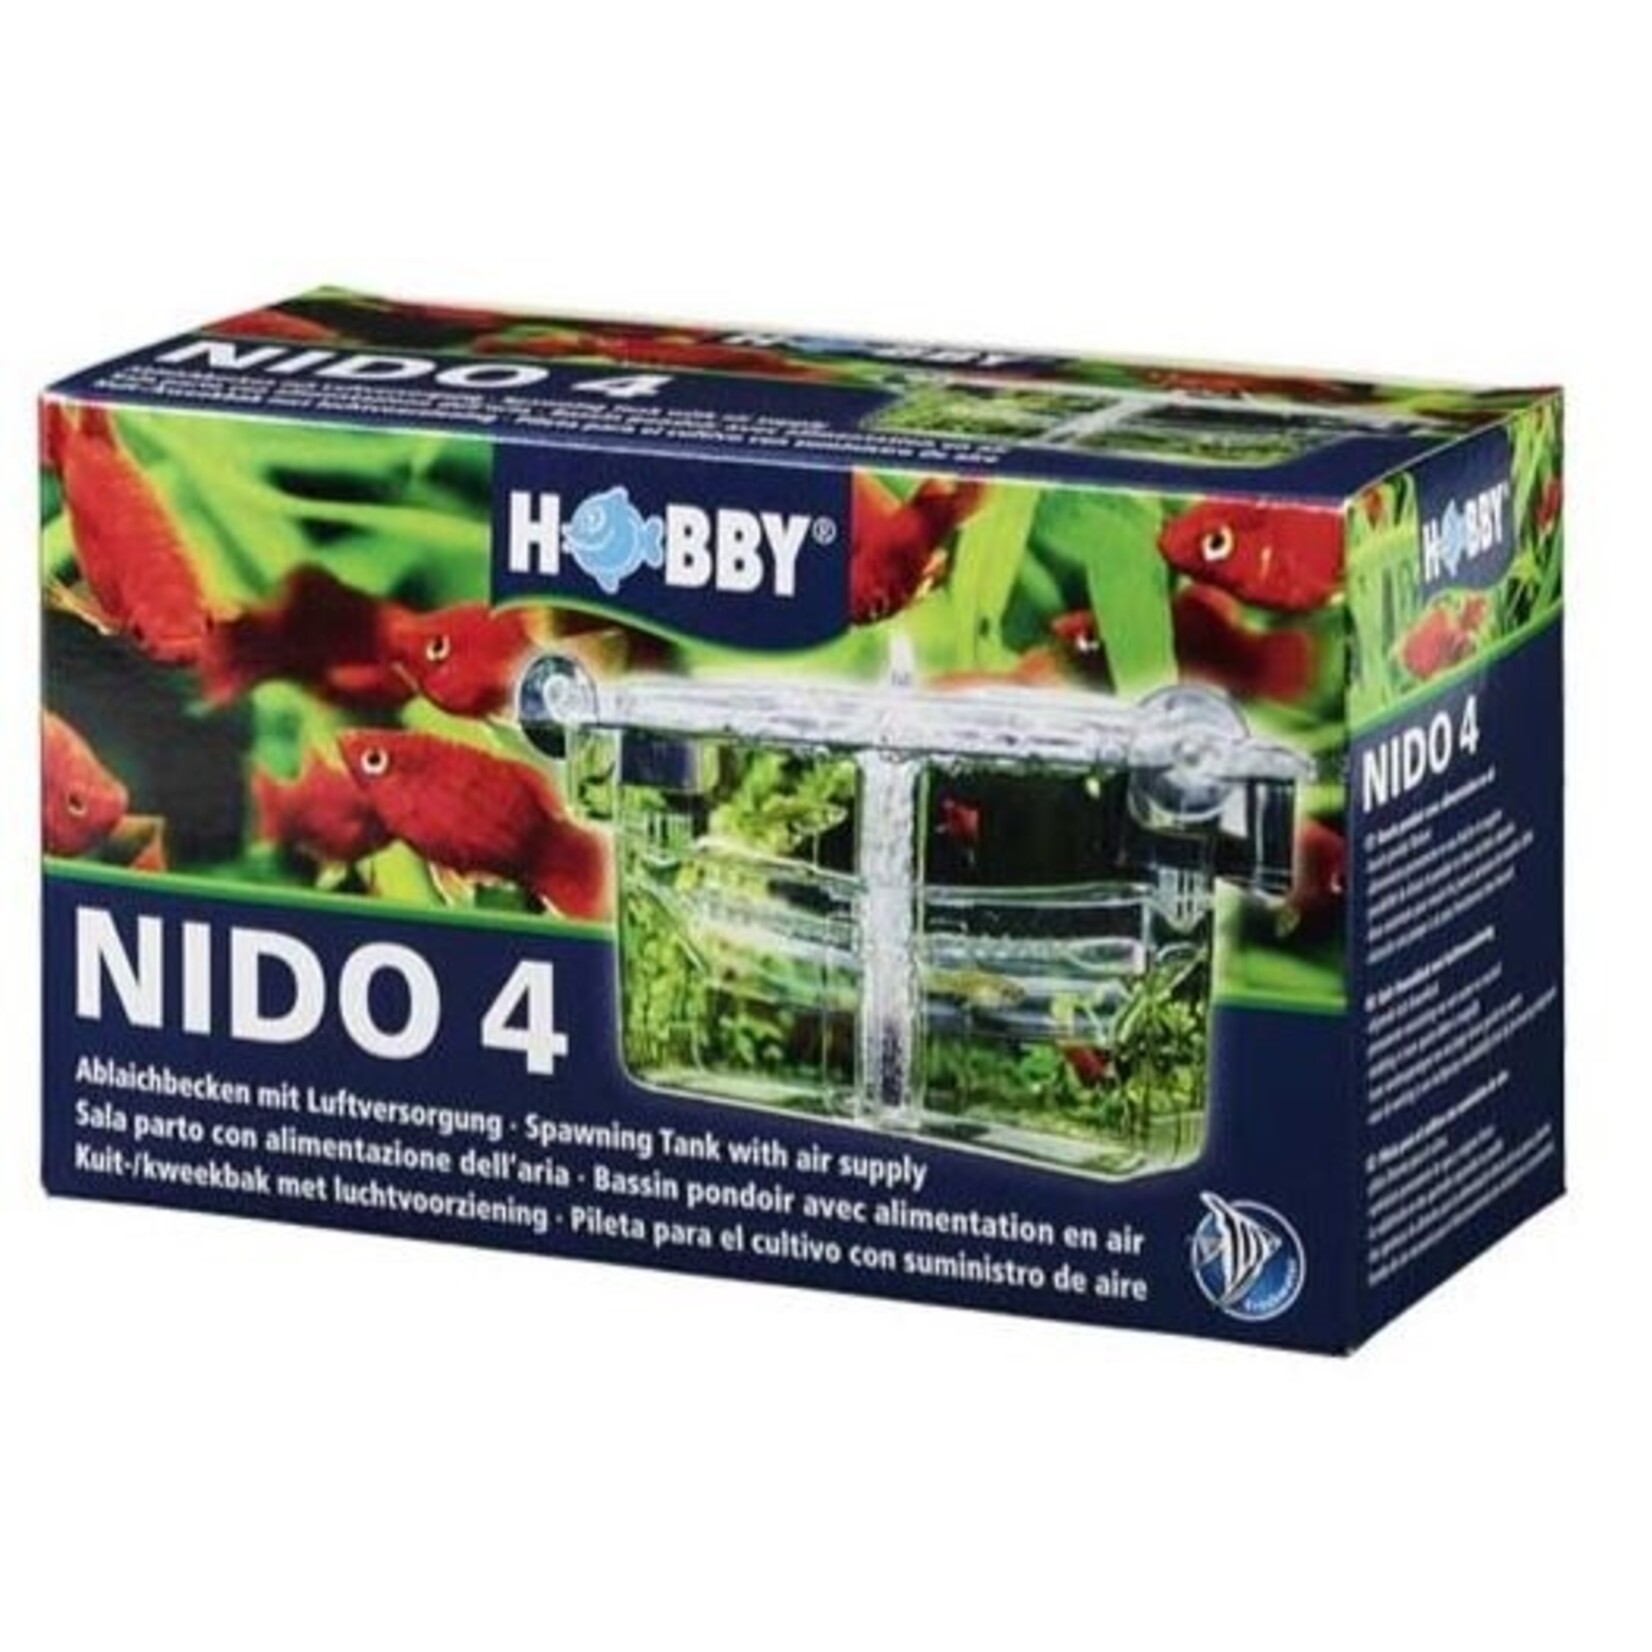 Hobby Nido 4 afzetbakje 23x10x11.5 cm